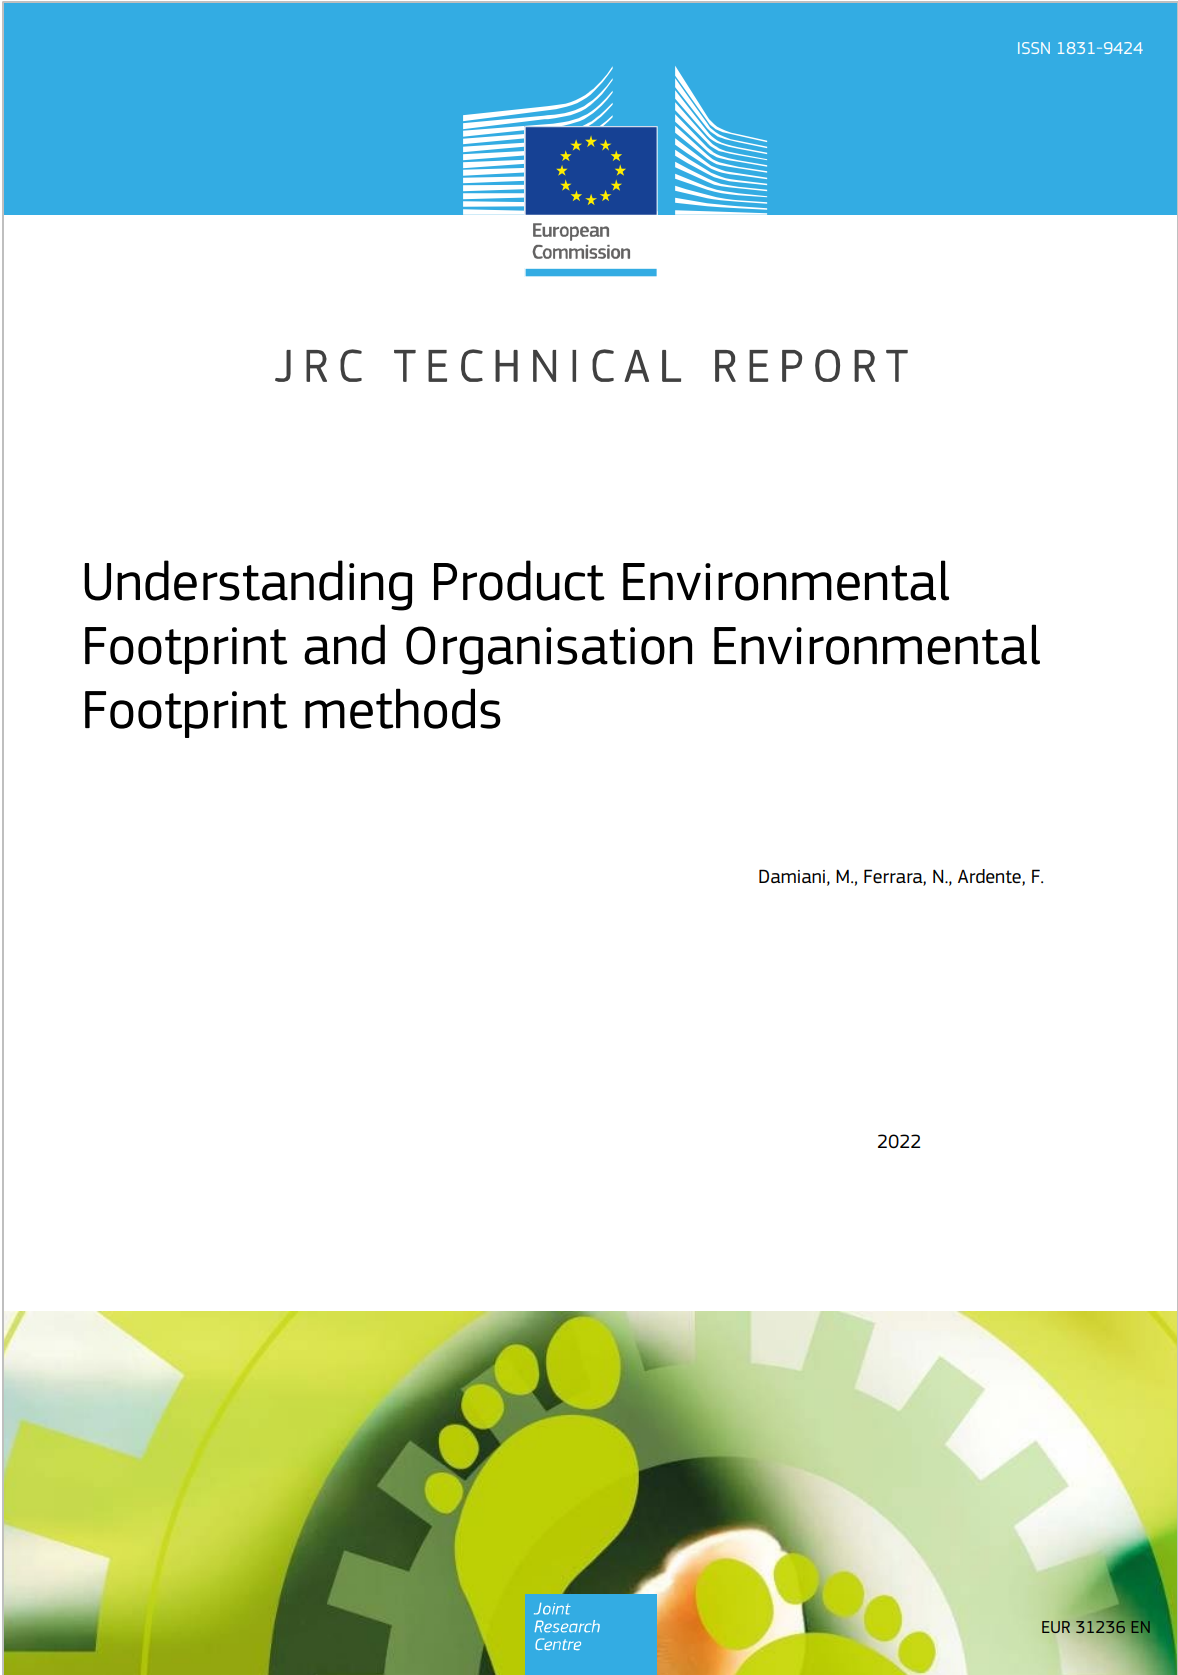 Understanding Product Environmental Footprint and Organisation Environmental Footprint methods